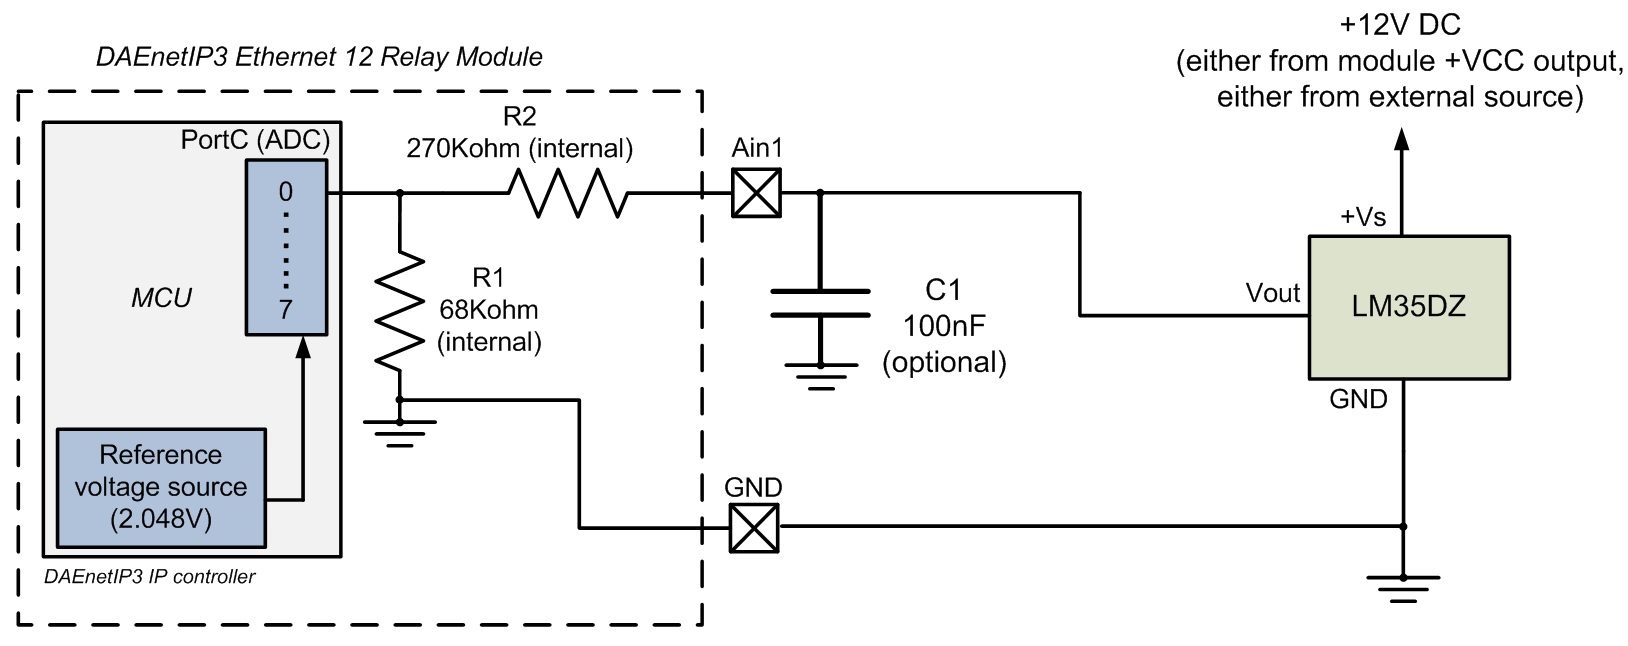 DAE-AN009: Connecting analog sensors to DAEnetIP3 ethernet 12 relay ...